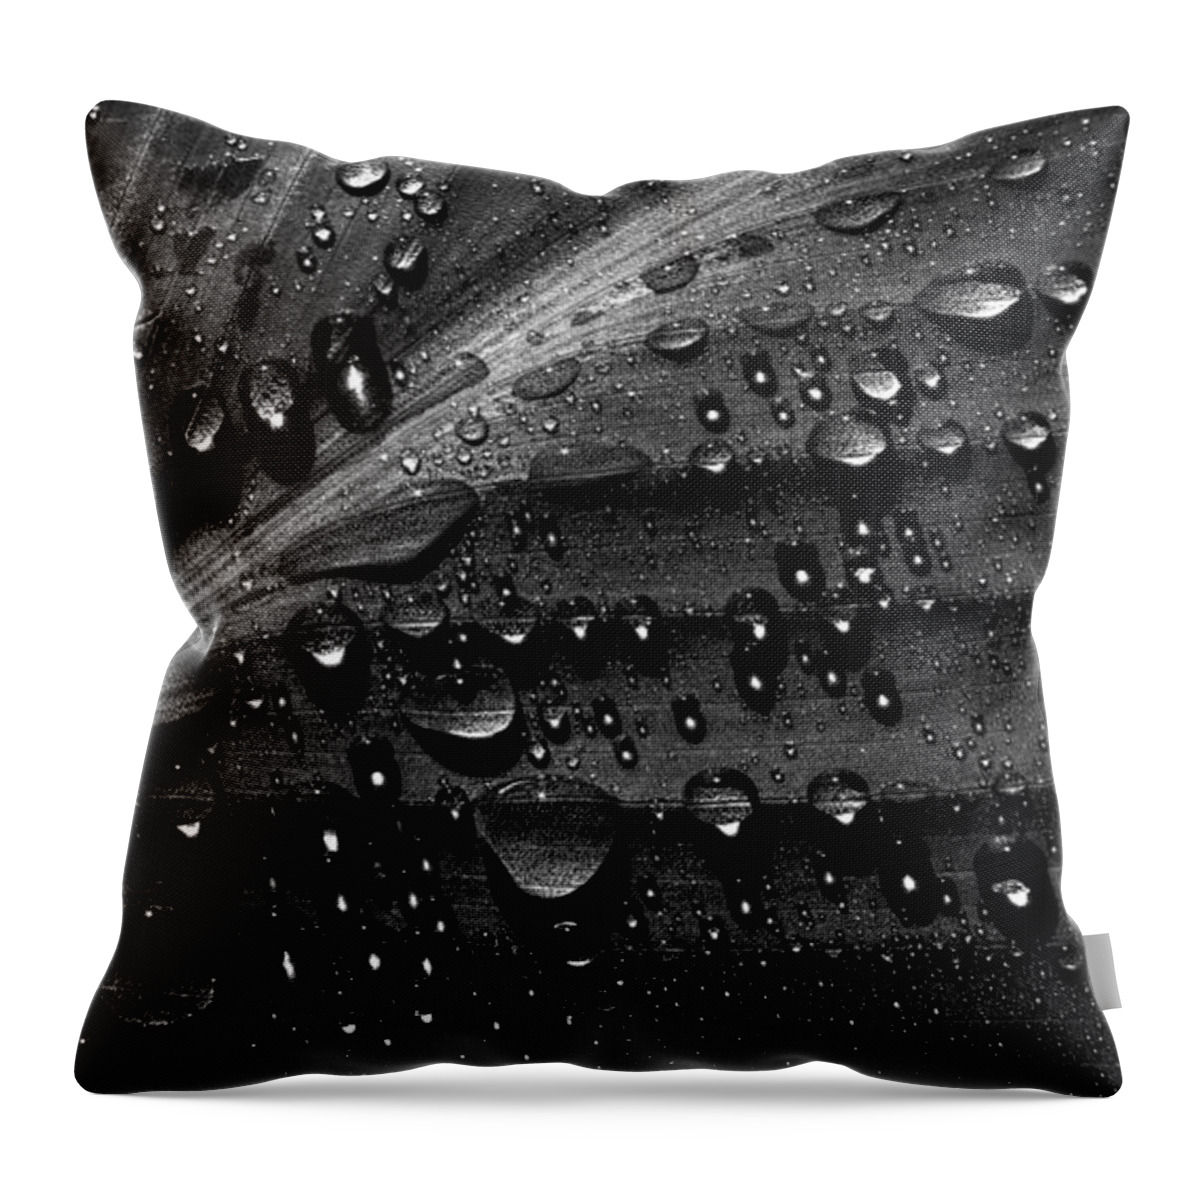 Rain Throw Pillow featuring the photograph Rain by Bob Orsillo